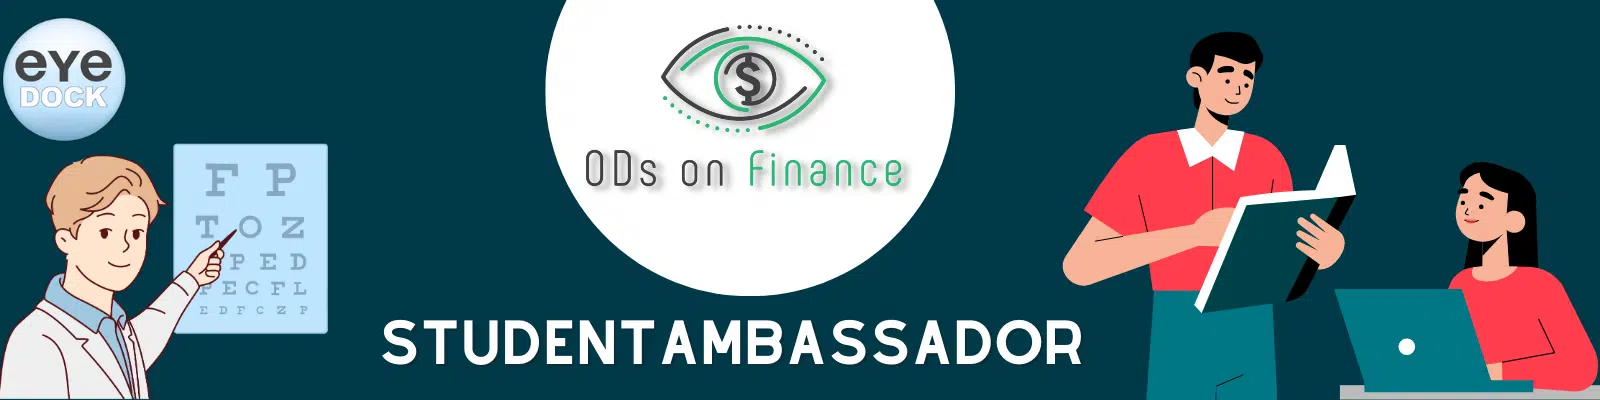 ODs on Finance Student Ambassador (1)